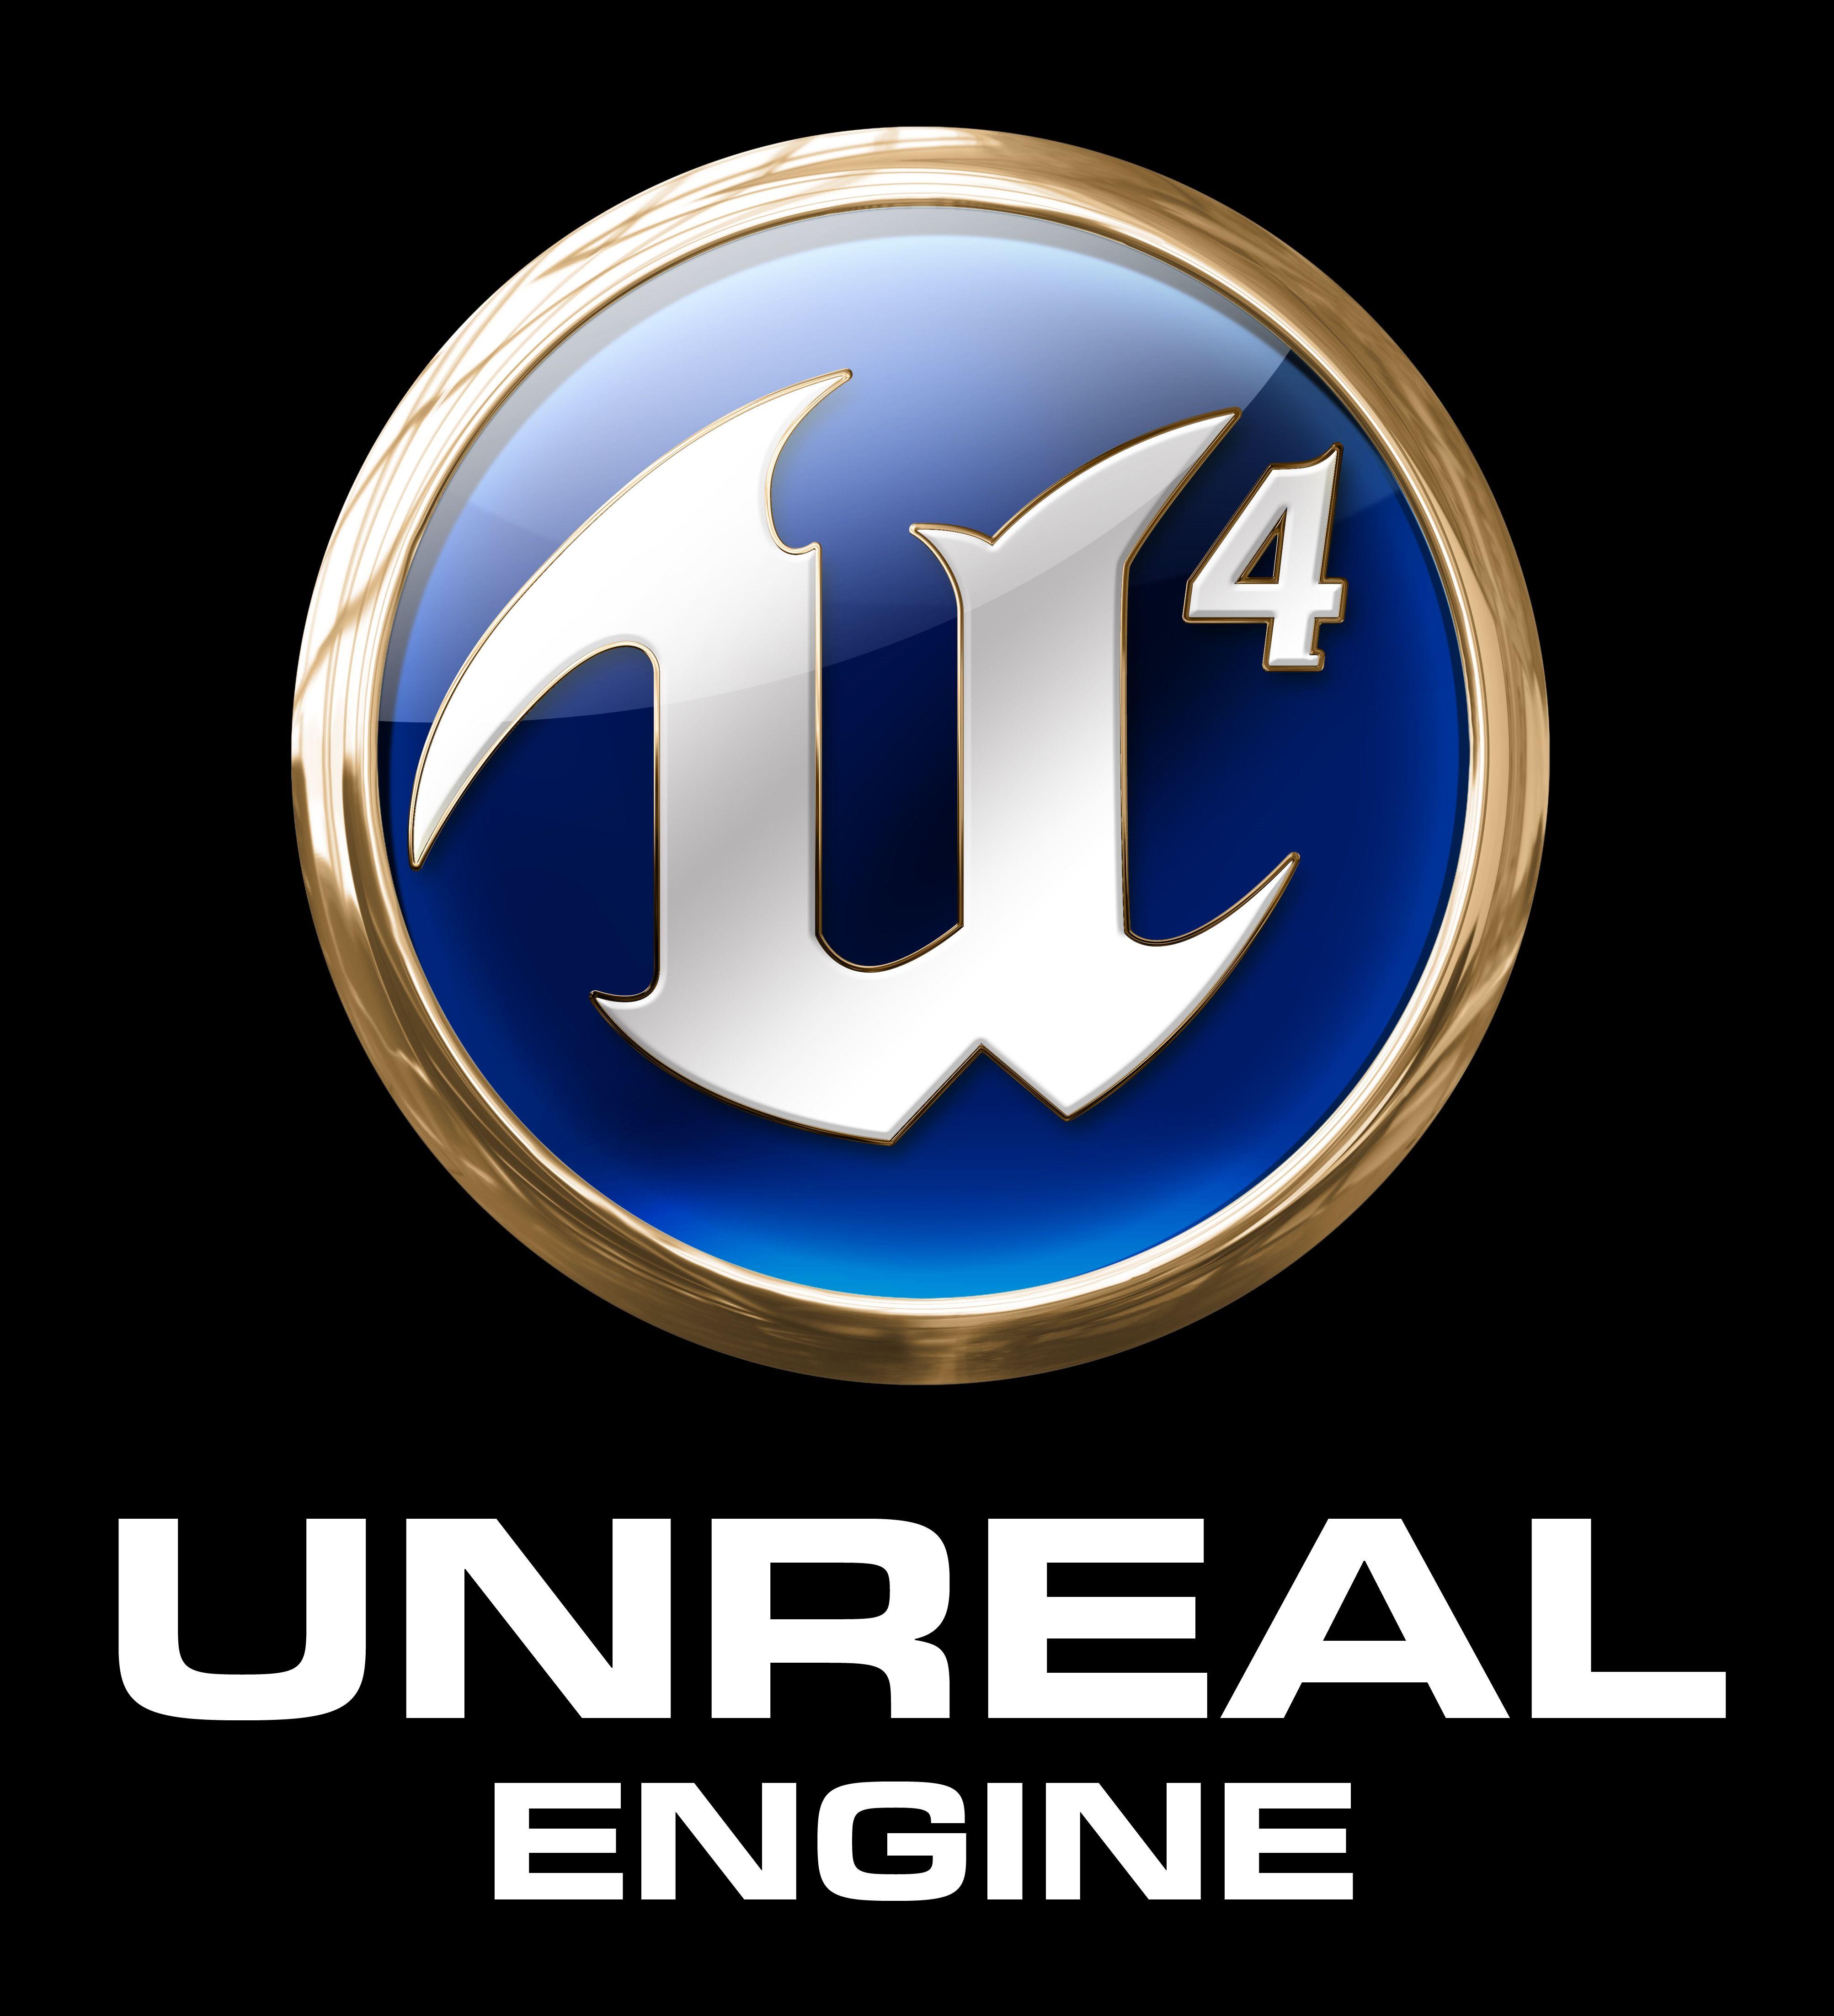 unreal engine 4 logo png